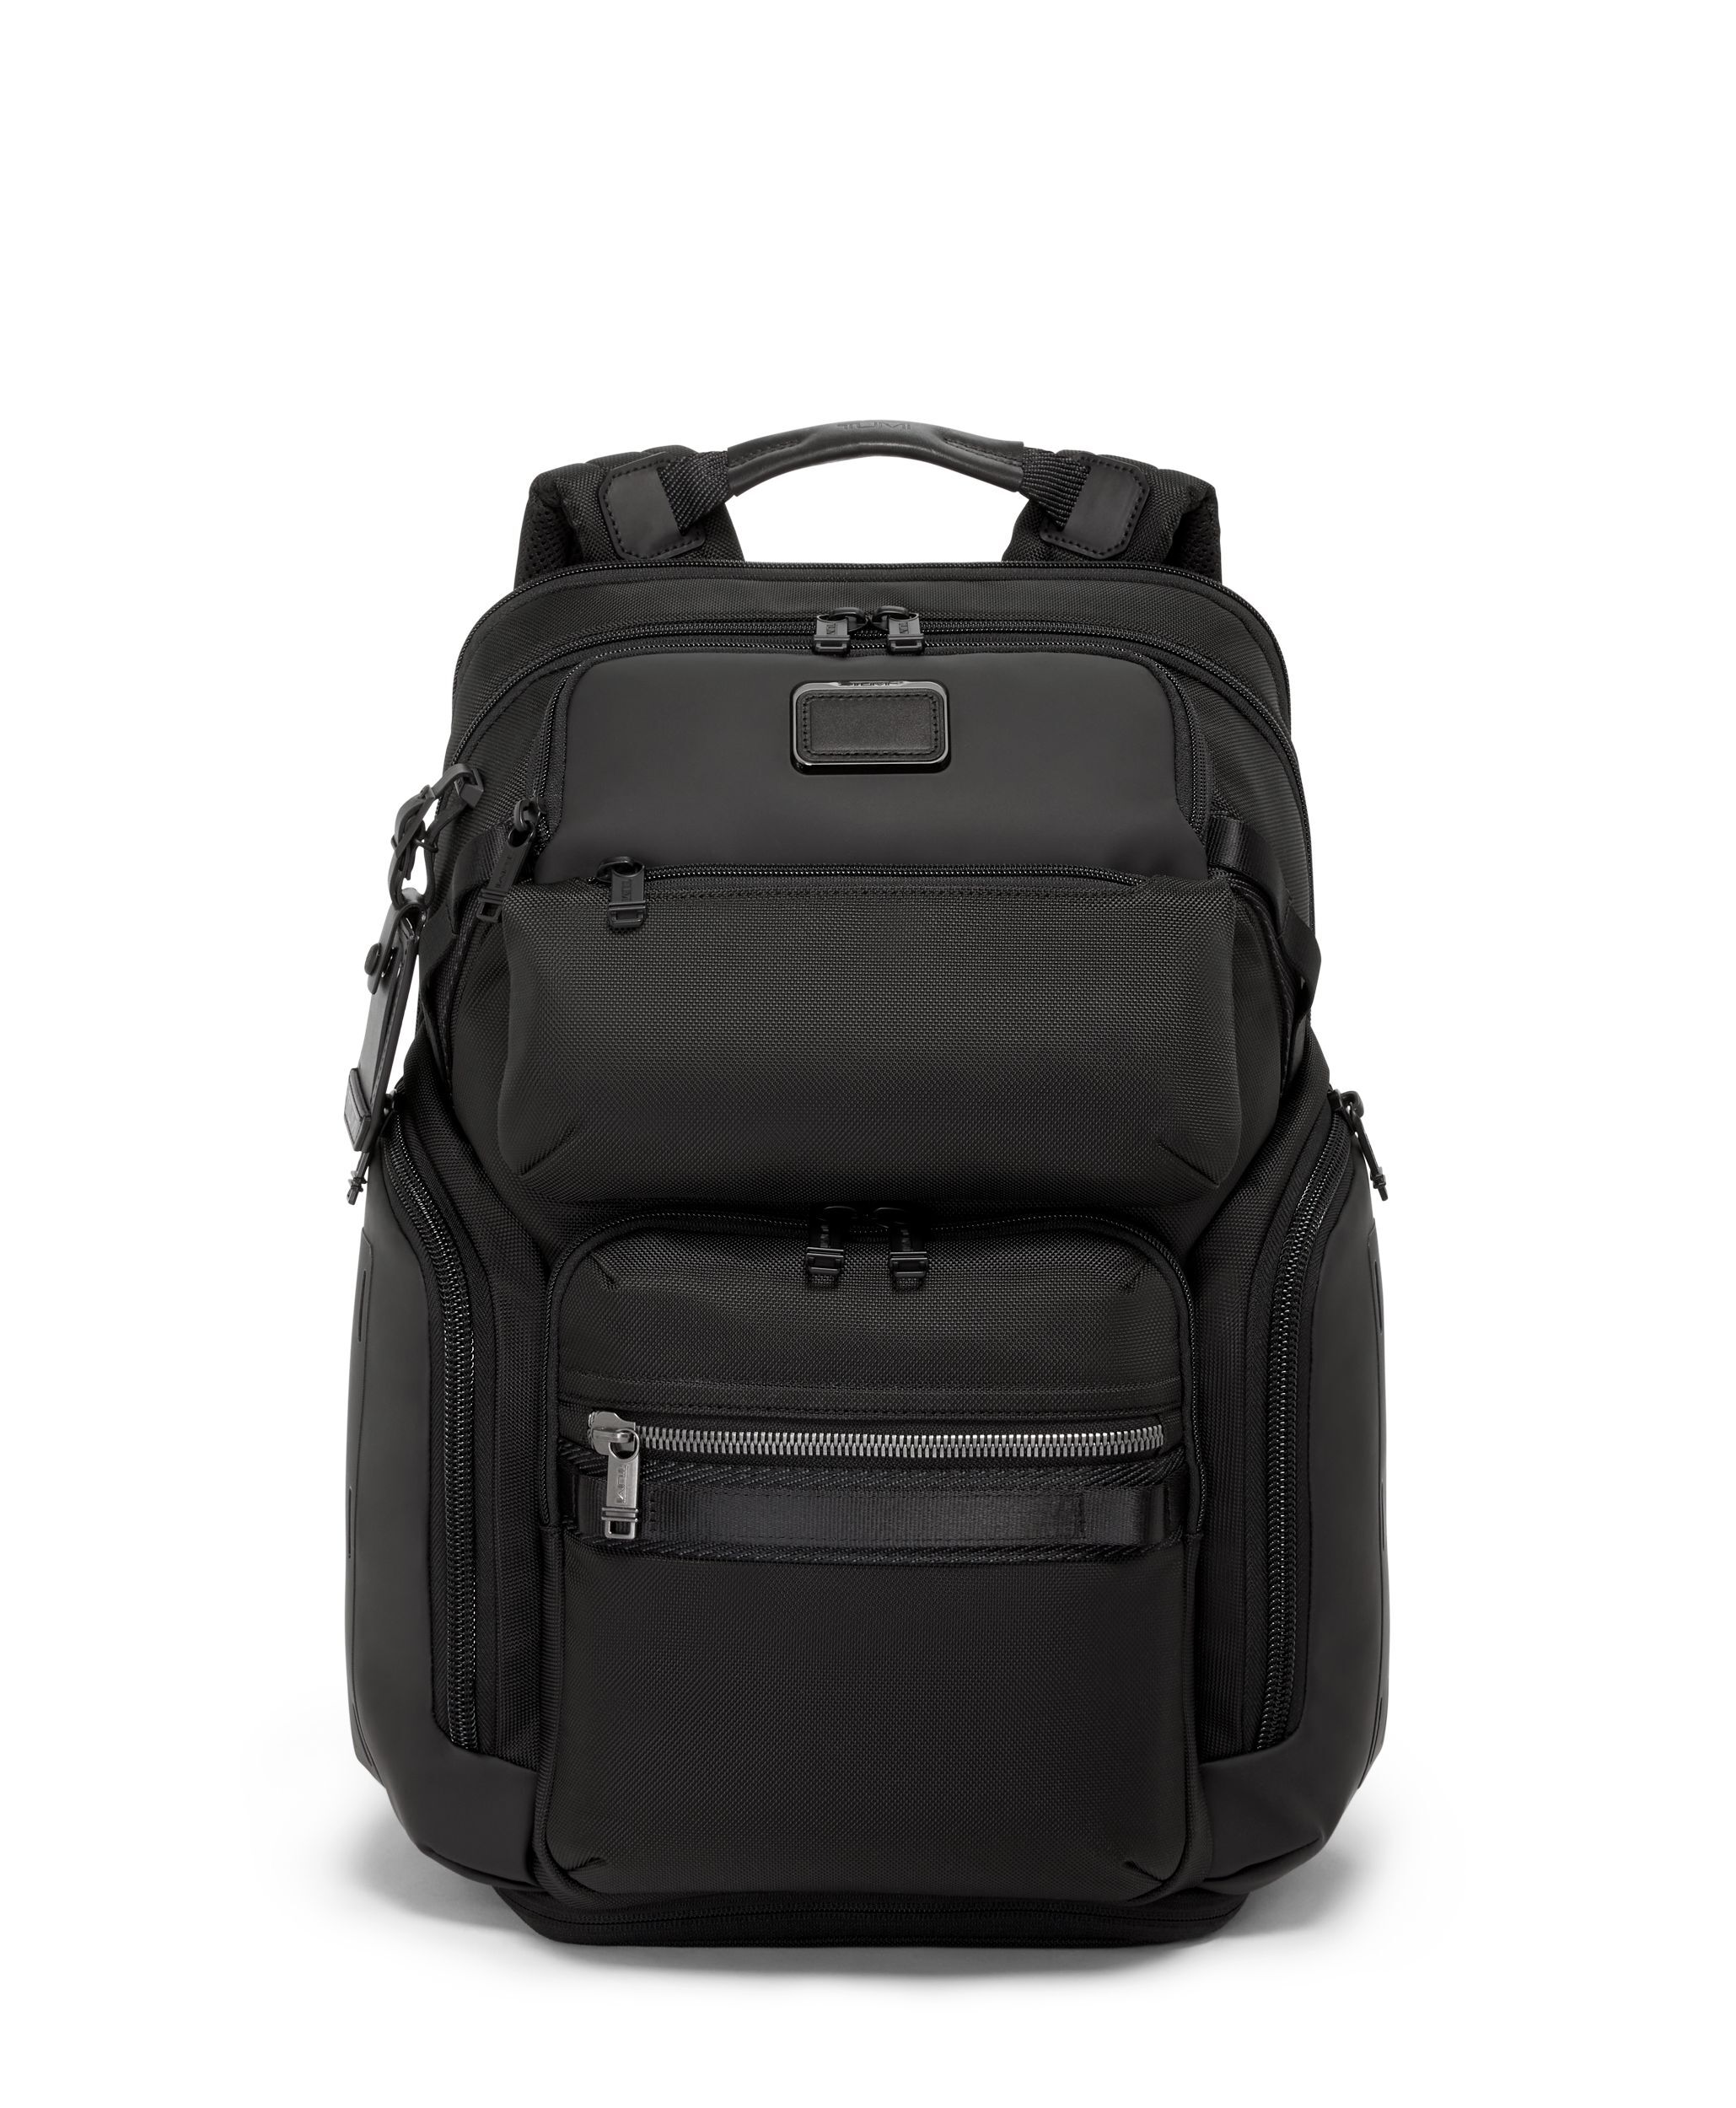 Bento Bag: Most Thoughtful Travel Bag Ever | Indiegogo